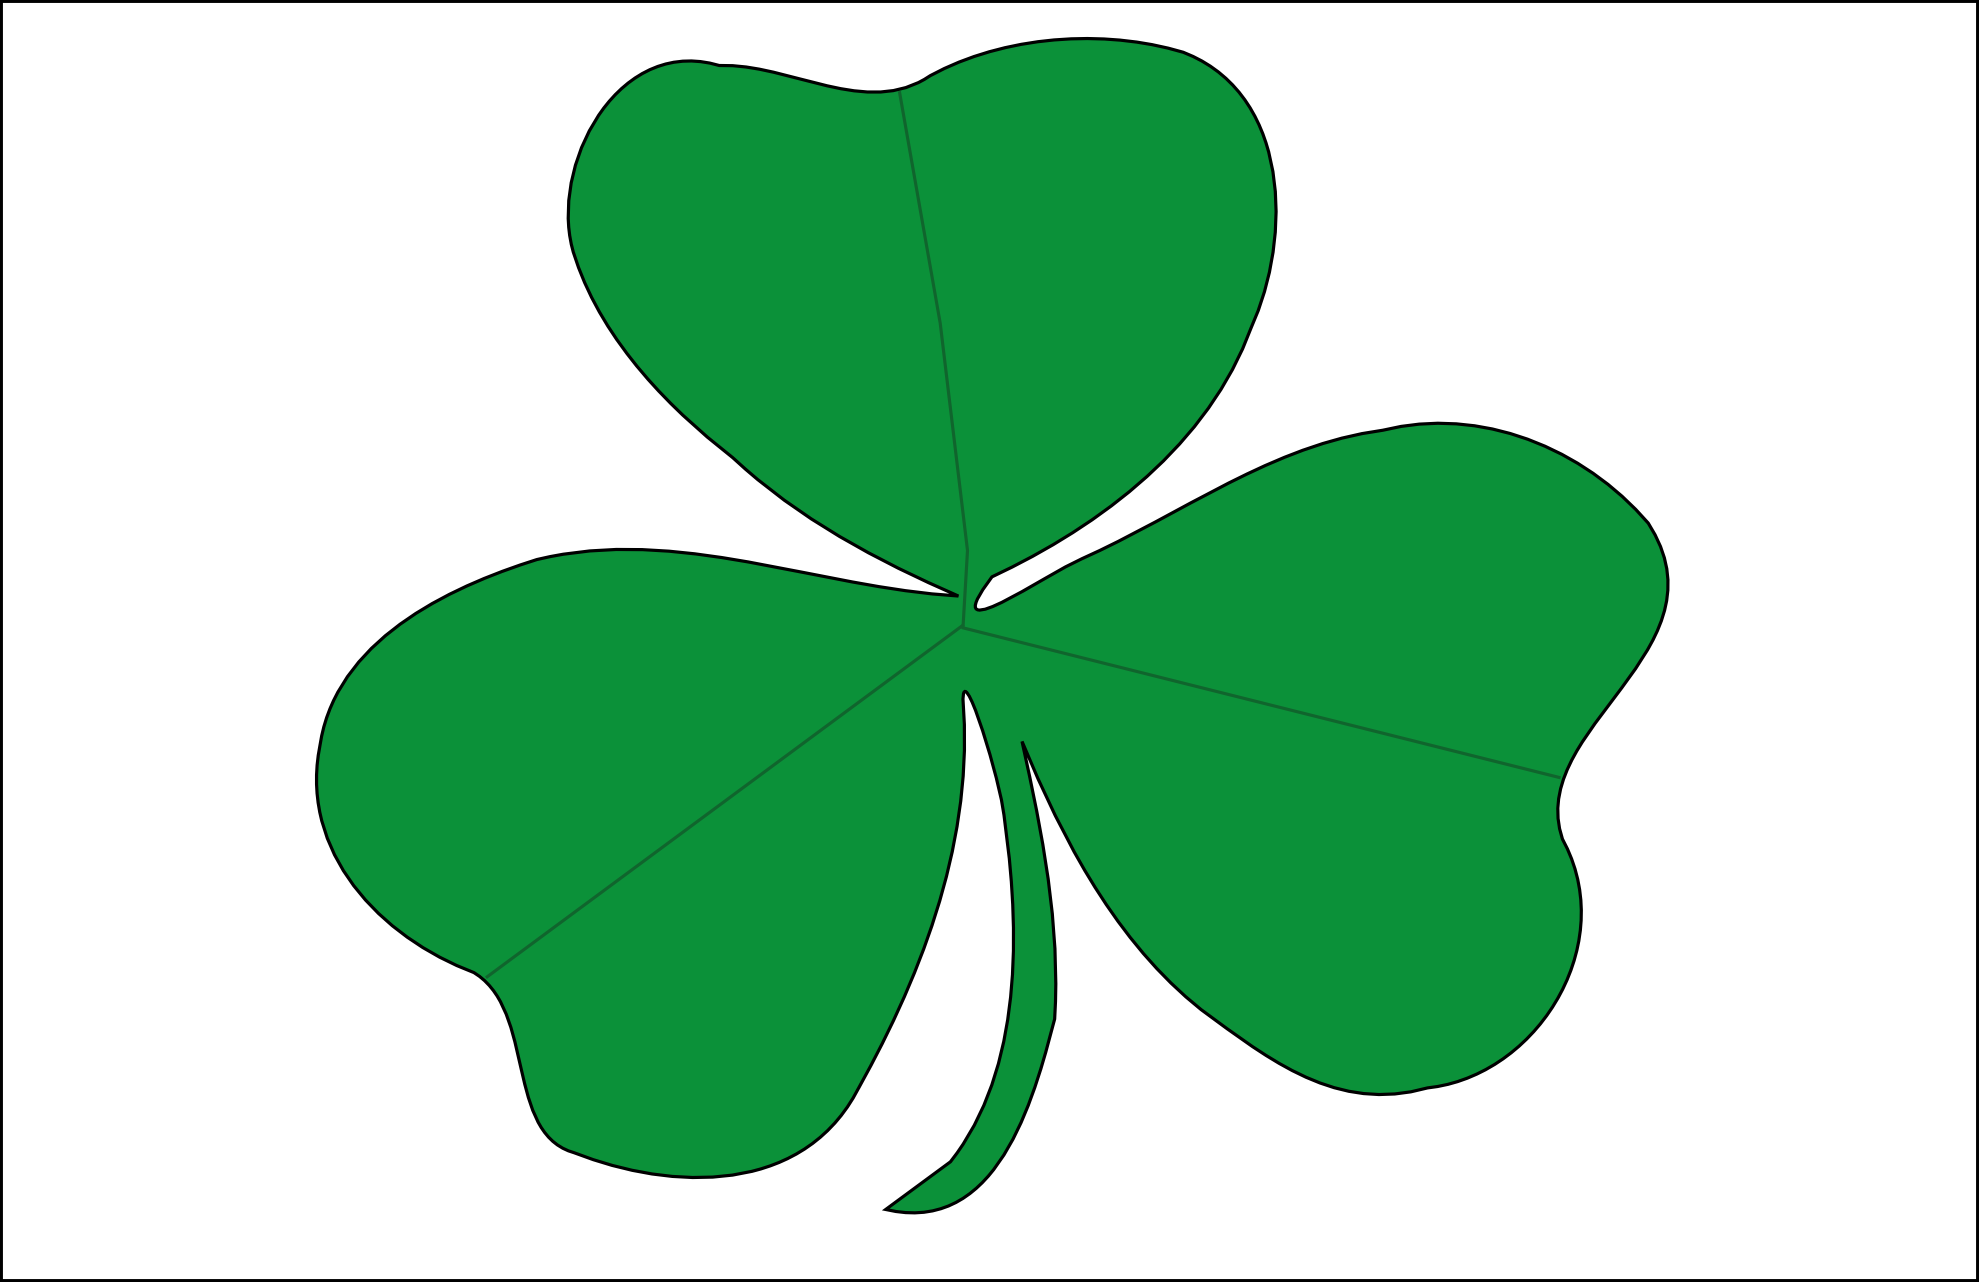 Clip Art: flag ireland rugby saint patricks day ... - ClipArt Best ...